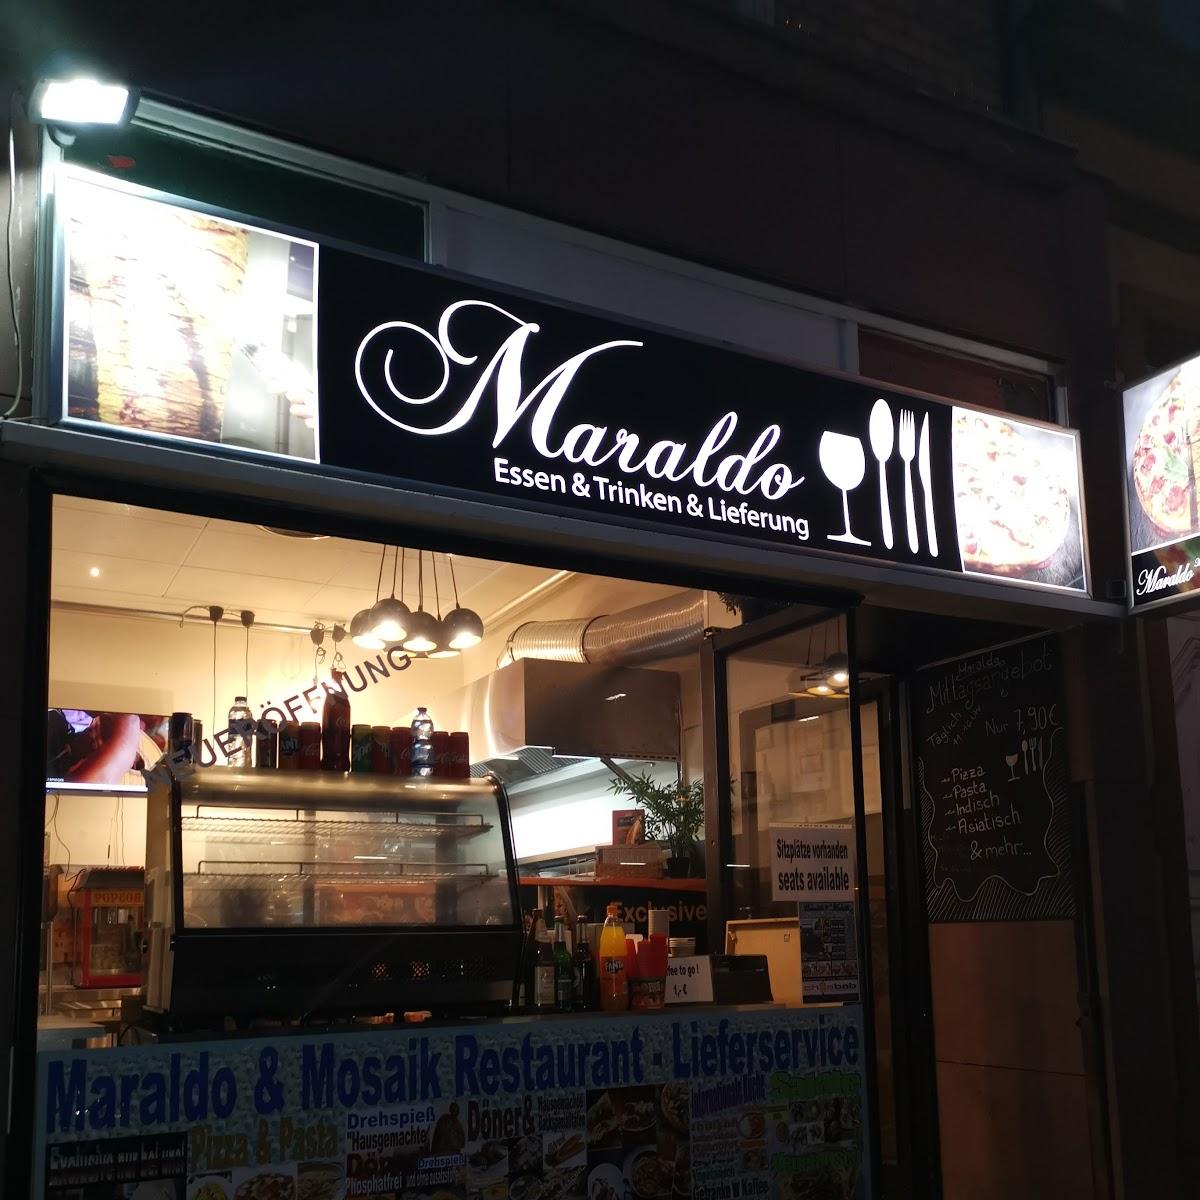 Maraldo & Mosaik Pizza- Pasta - Döner Lieferservice